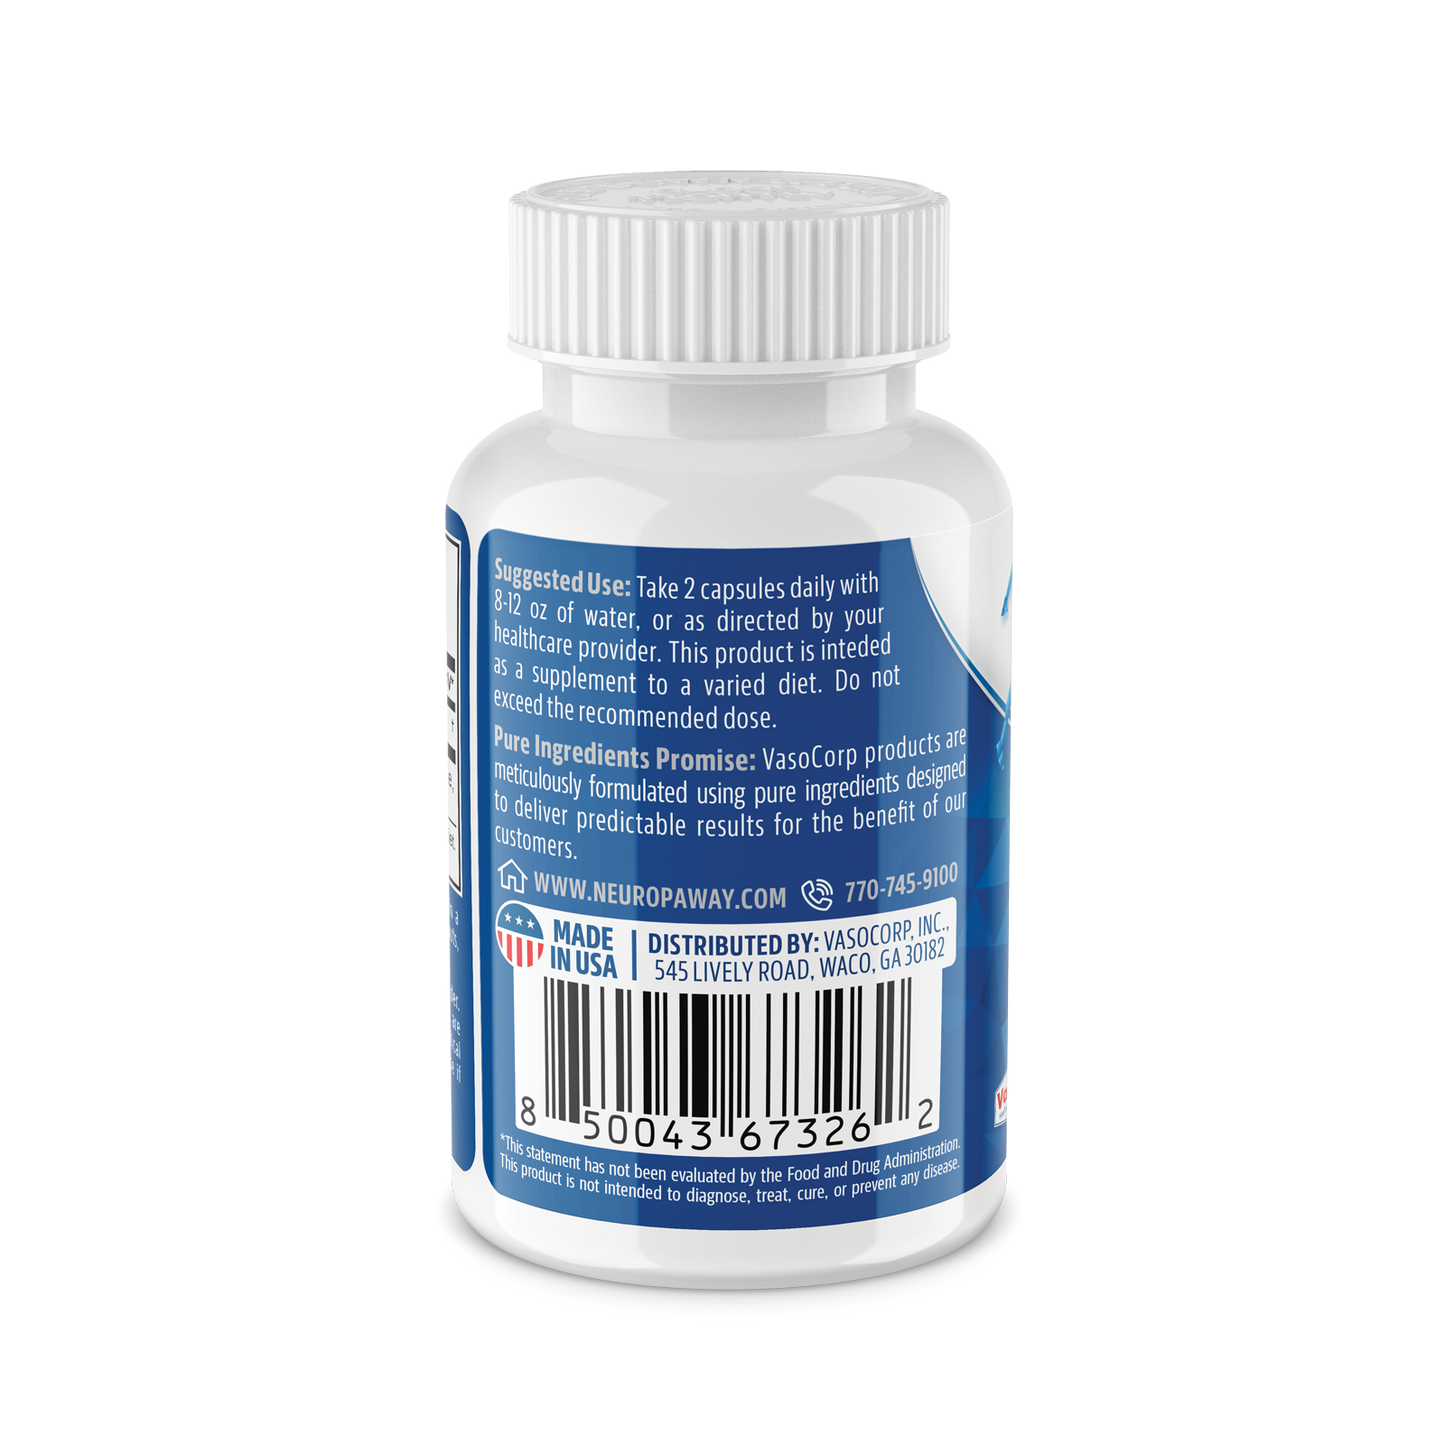 N-Acetyl-L-Carnosine 600mg 60CT Acid Resistant Capsules